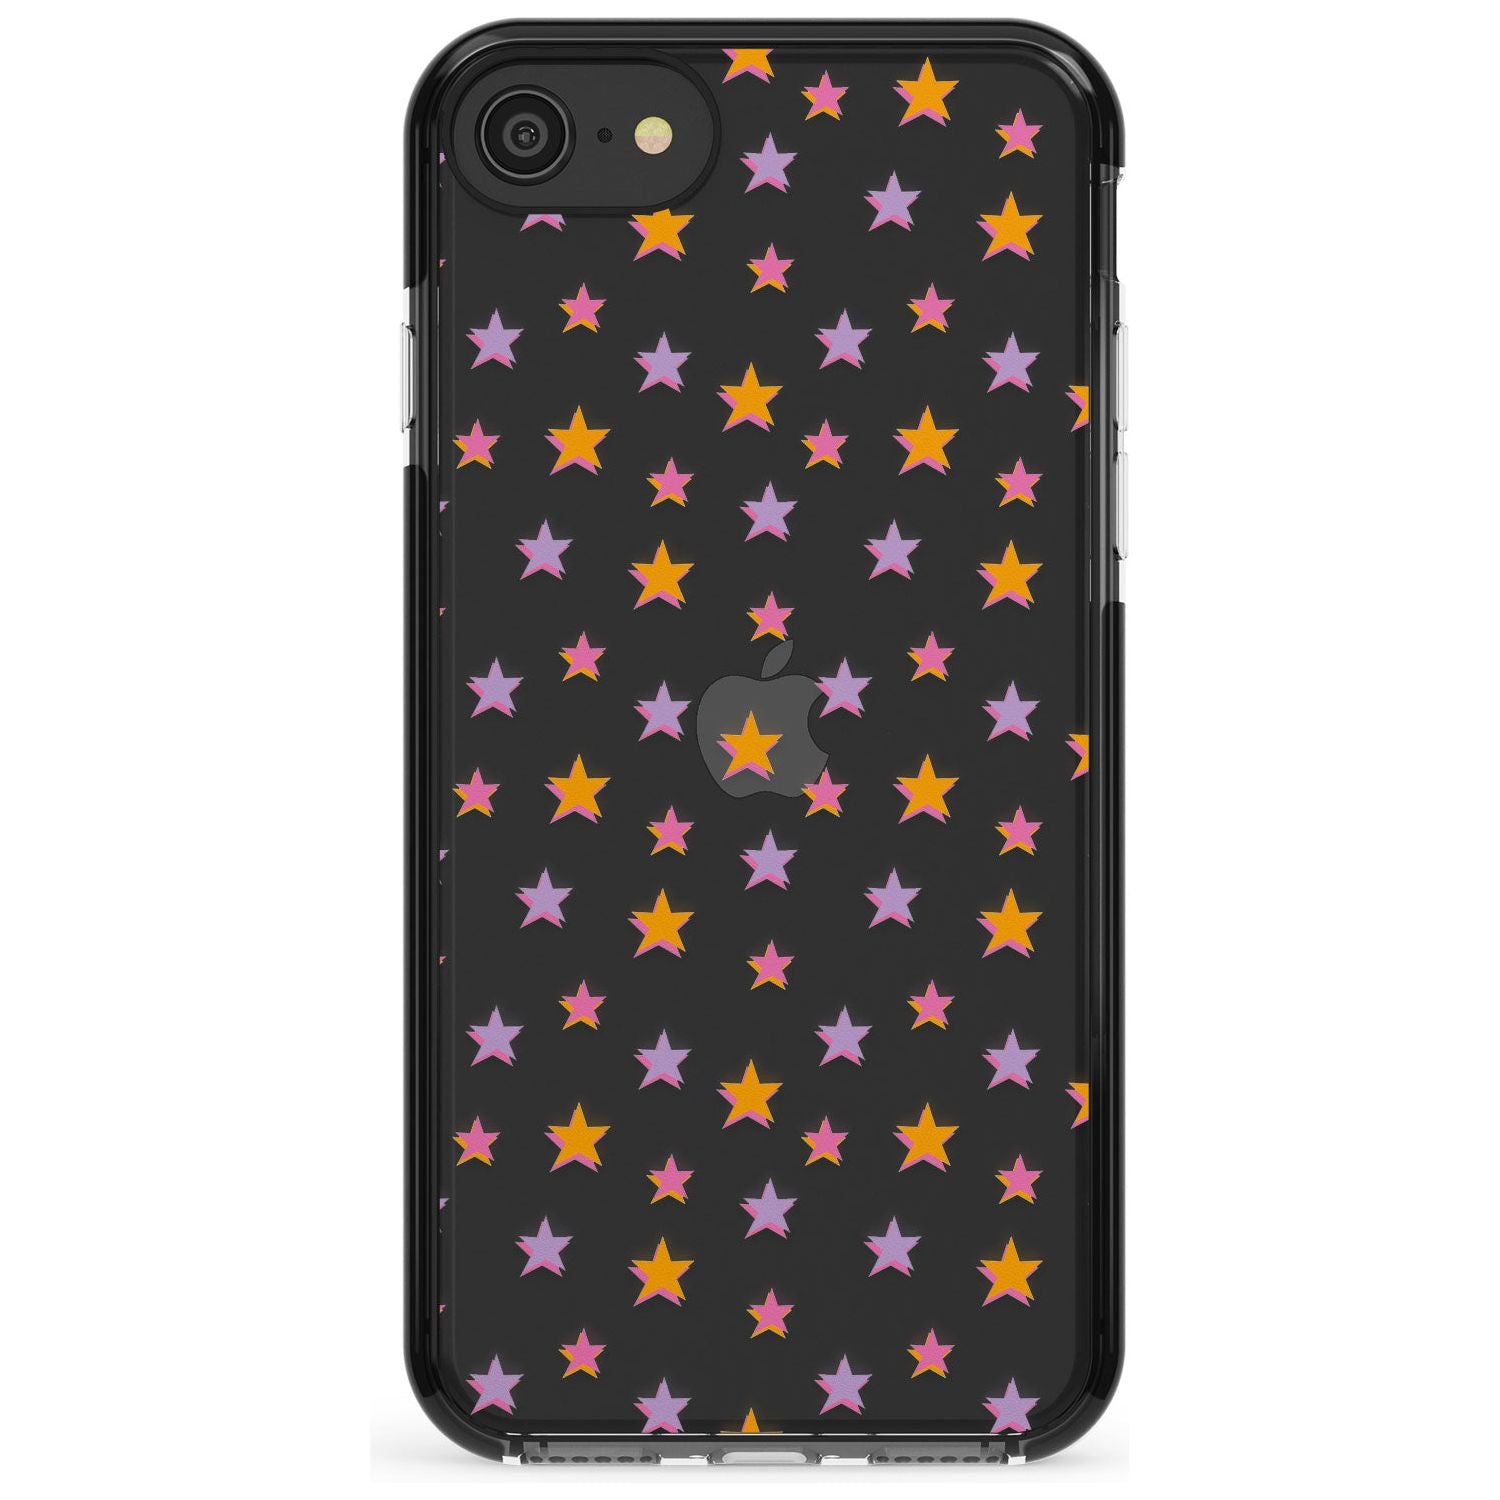 Spangling Stars Pattern Black Impact Phone Case for iPhone SE 8 7 Plus